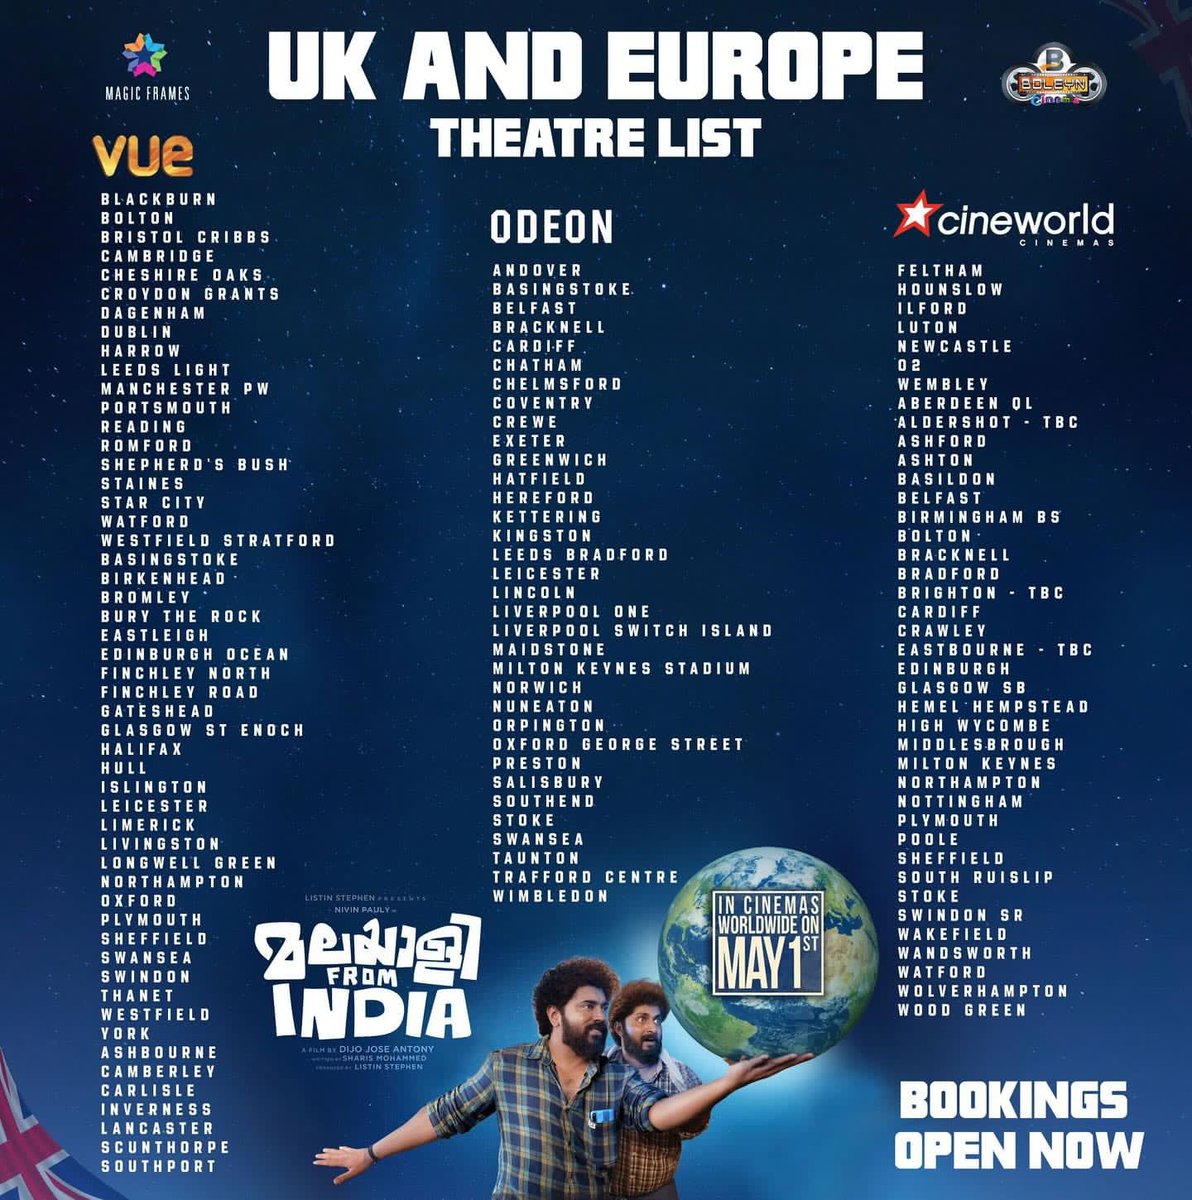 #MalayaleeFromIndia UK &  Europe Theatre list Here 🇬🇧🇪🇺  Advance Booking Opens Now 💚  #NivinPauly #DijoJoseAntony #AnaswaraRajan #ListinStephen

@NivinOfficial @DijoJoseAntony @magicframes2011